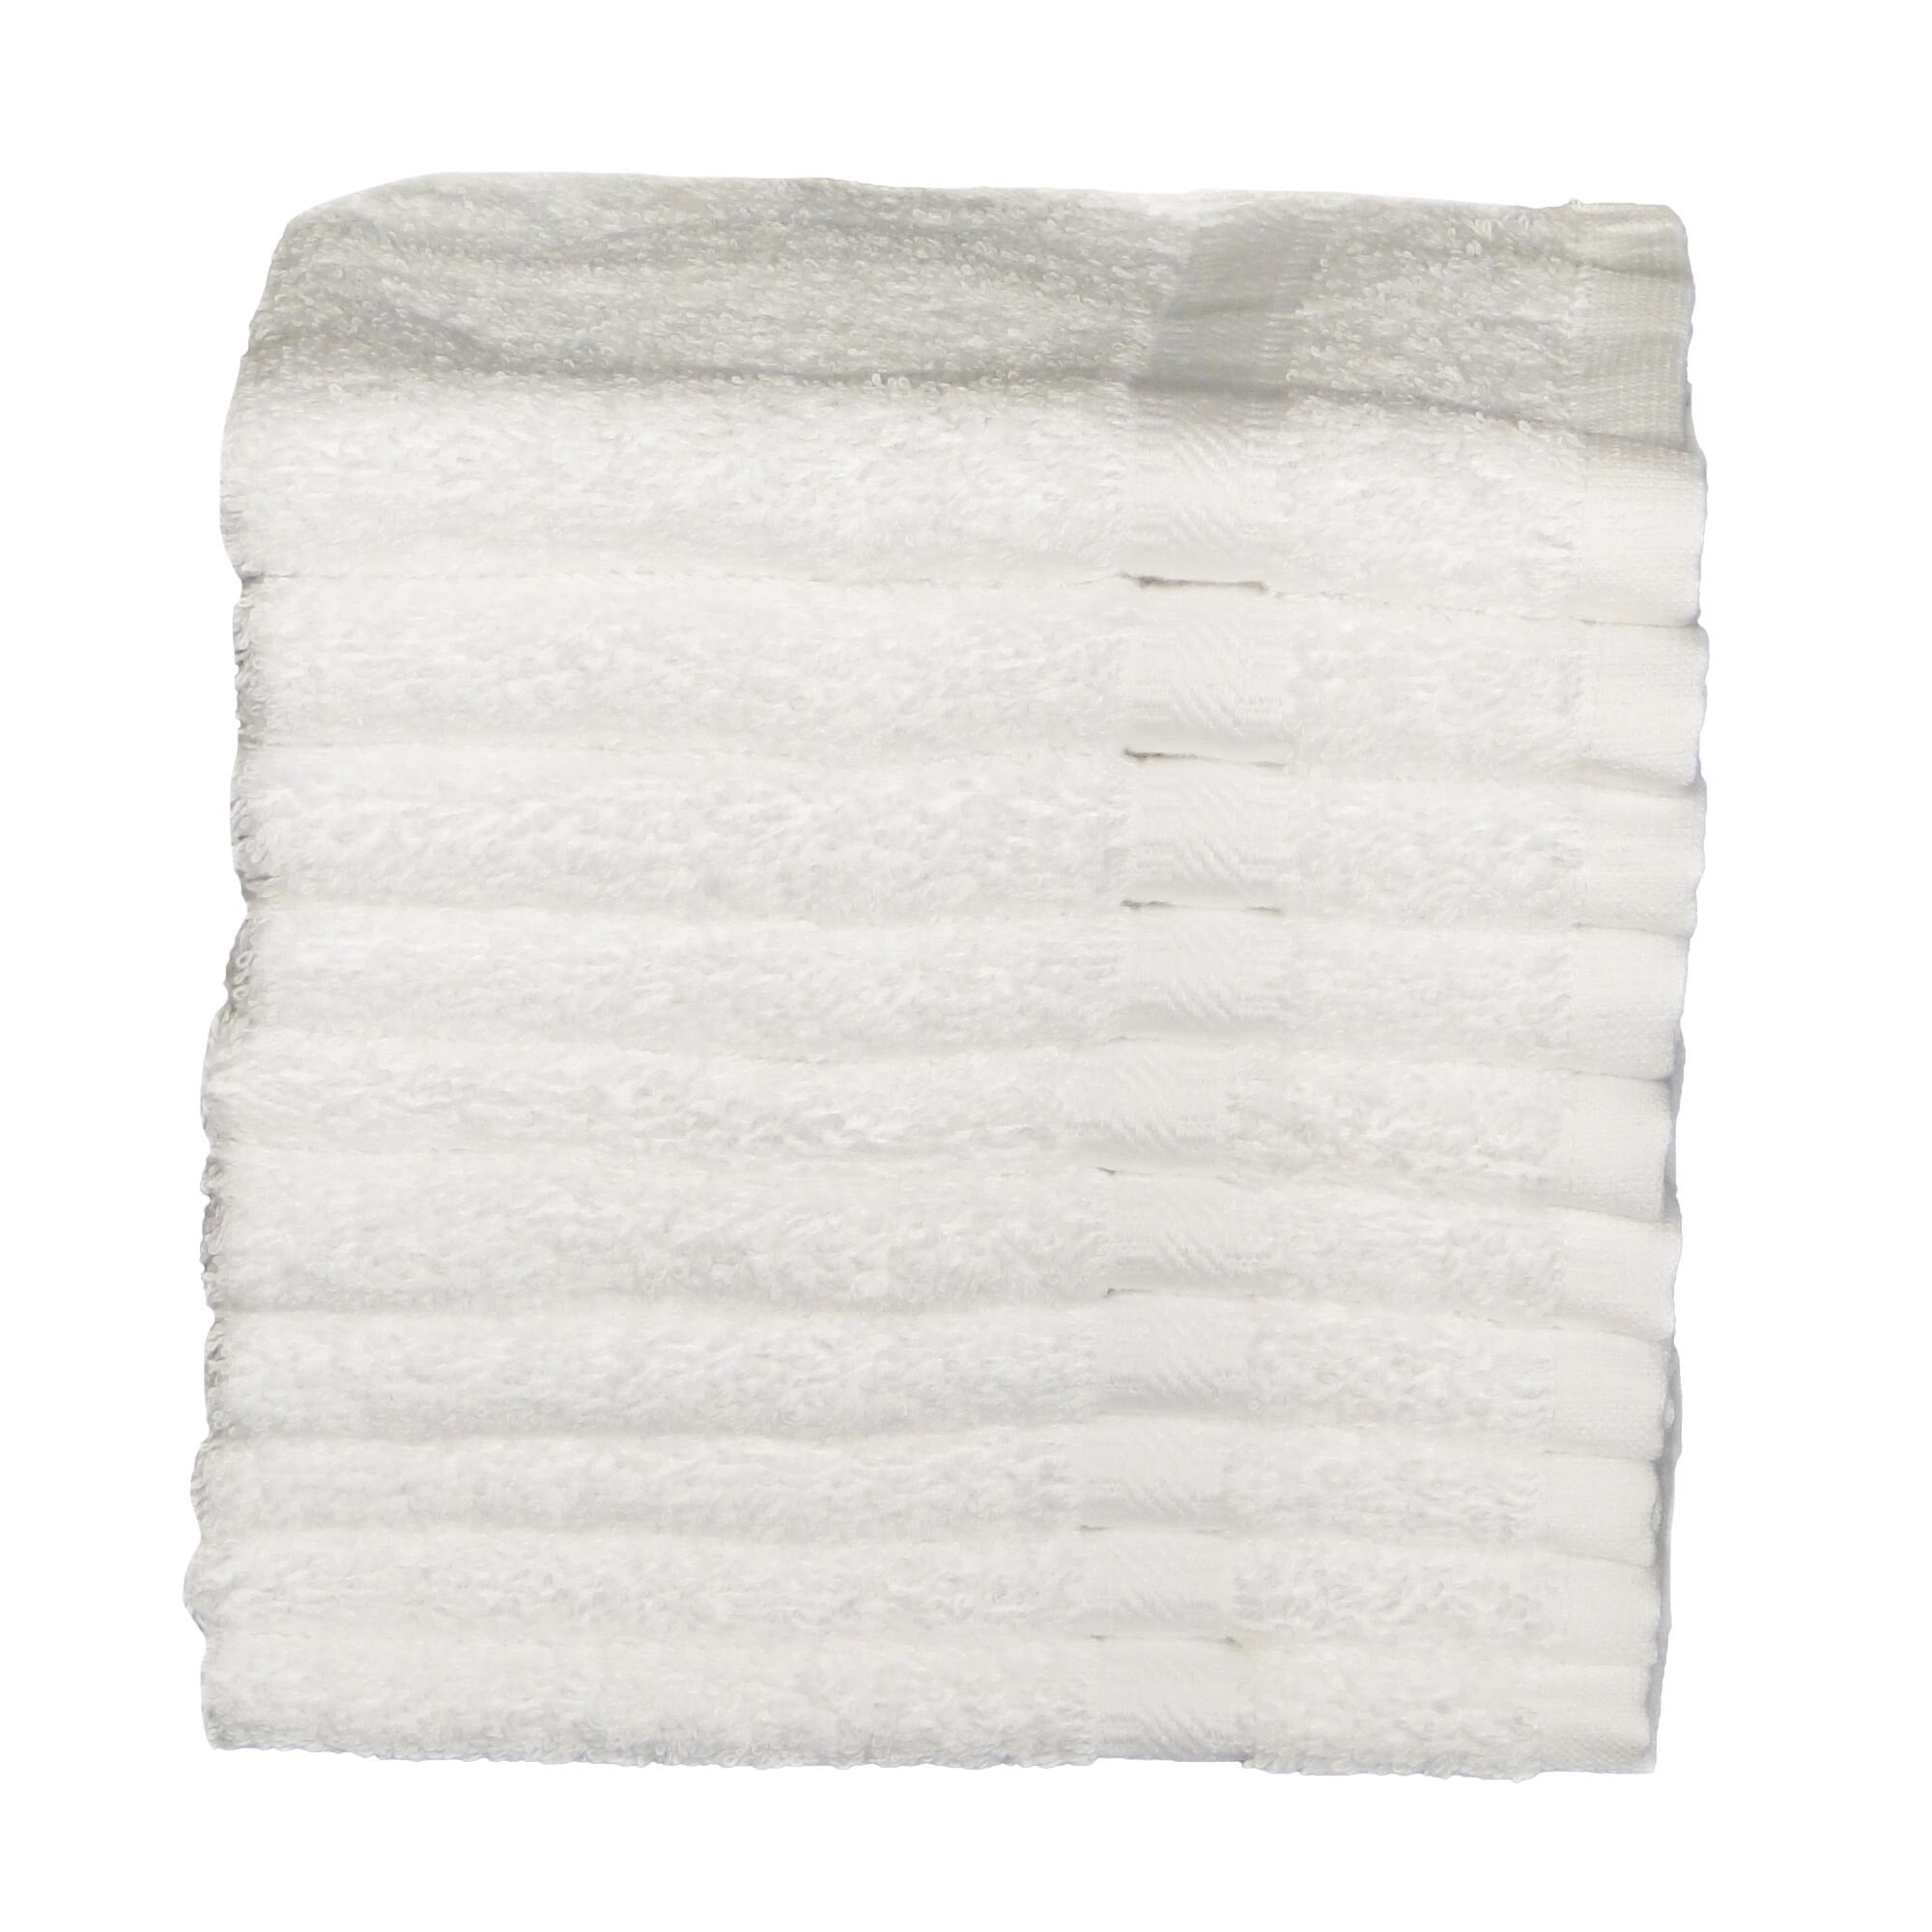 Baltic Linen Royal Excellence100/% Ring Spun Cotton Hotel Bath Sheets 35 x 70-inch White 2 Pack